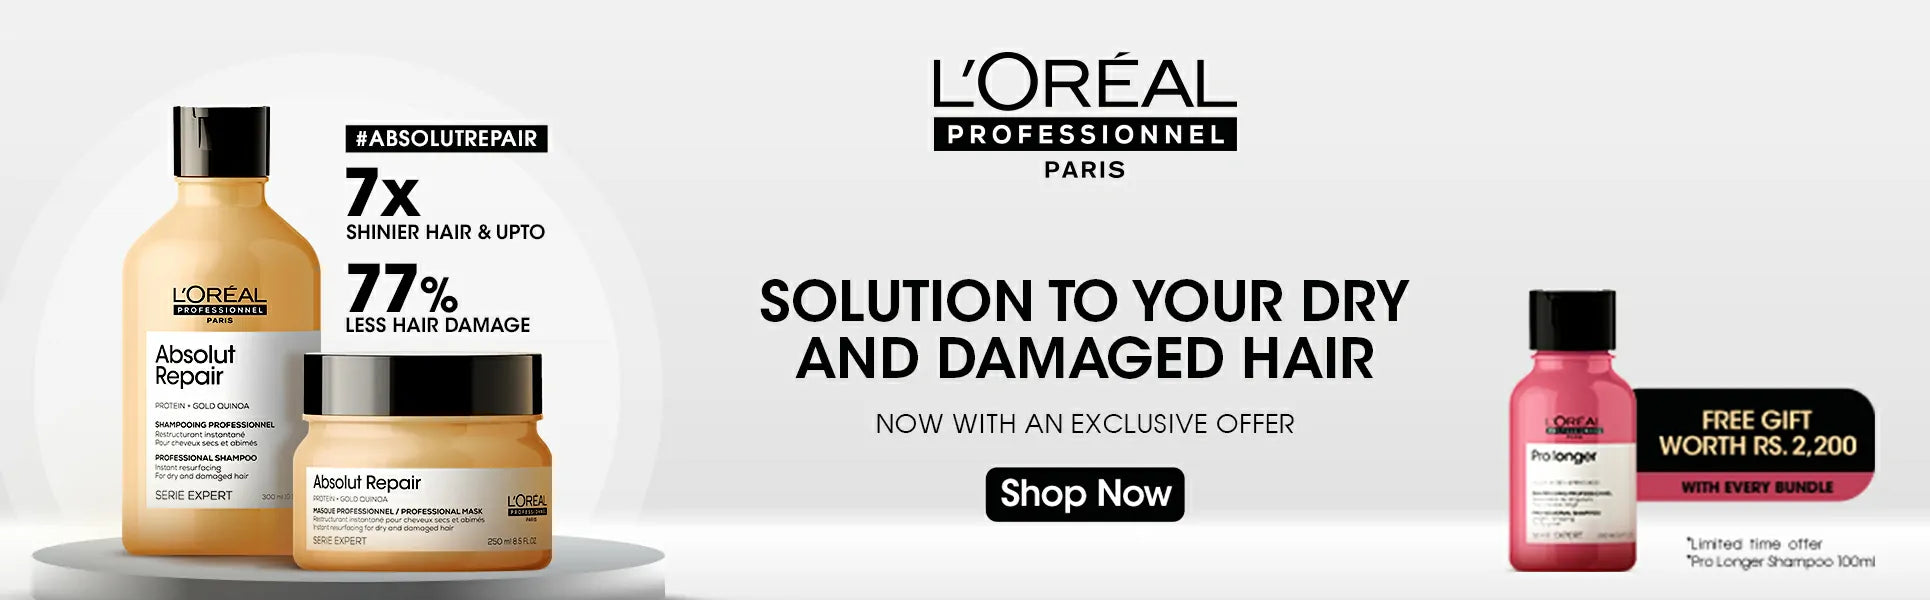 Loreal-Branded-Brush-AR-Reana-1930x600-1-1536x478